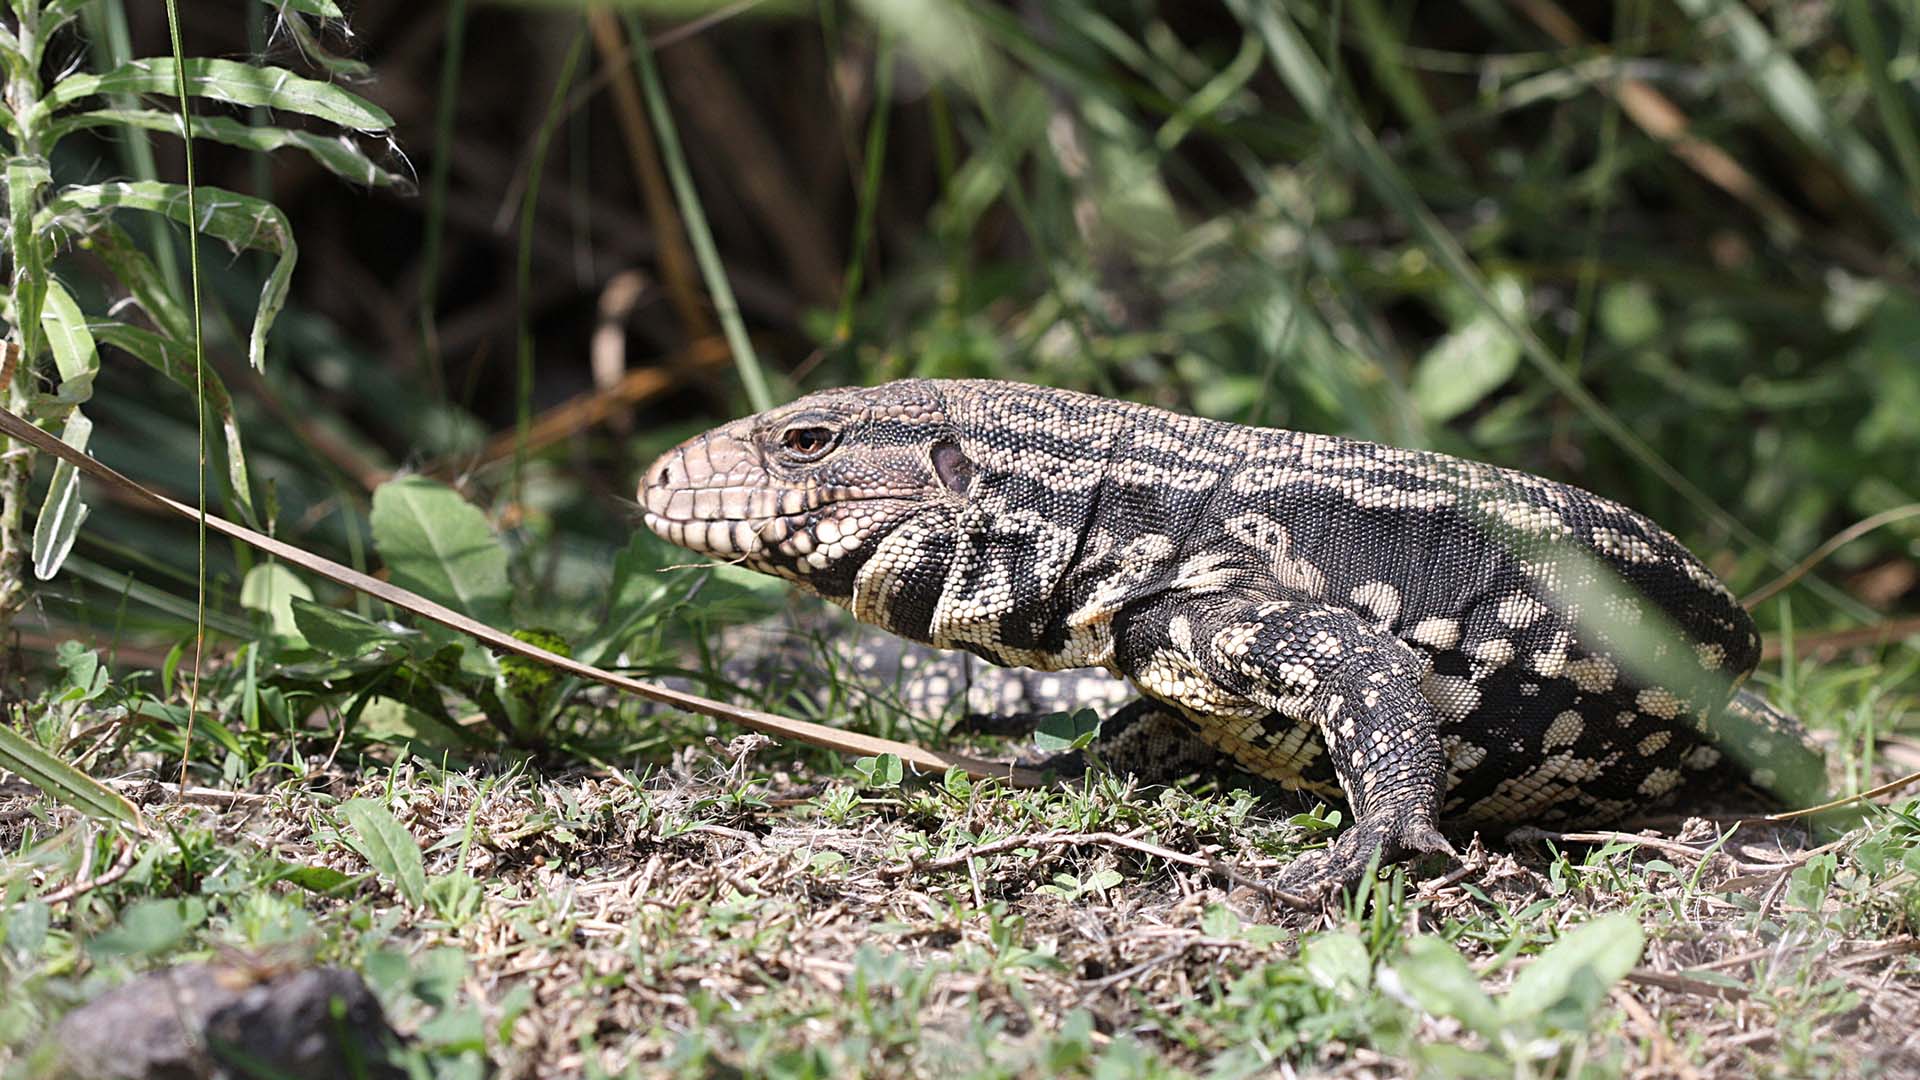 Black and white tegu reptiles have invaded South Carolina